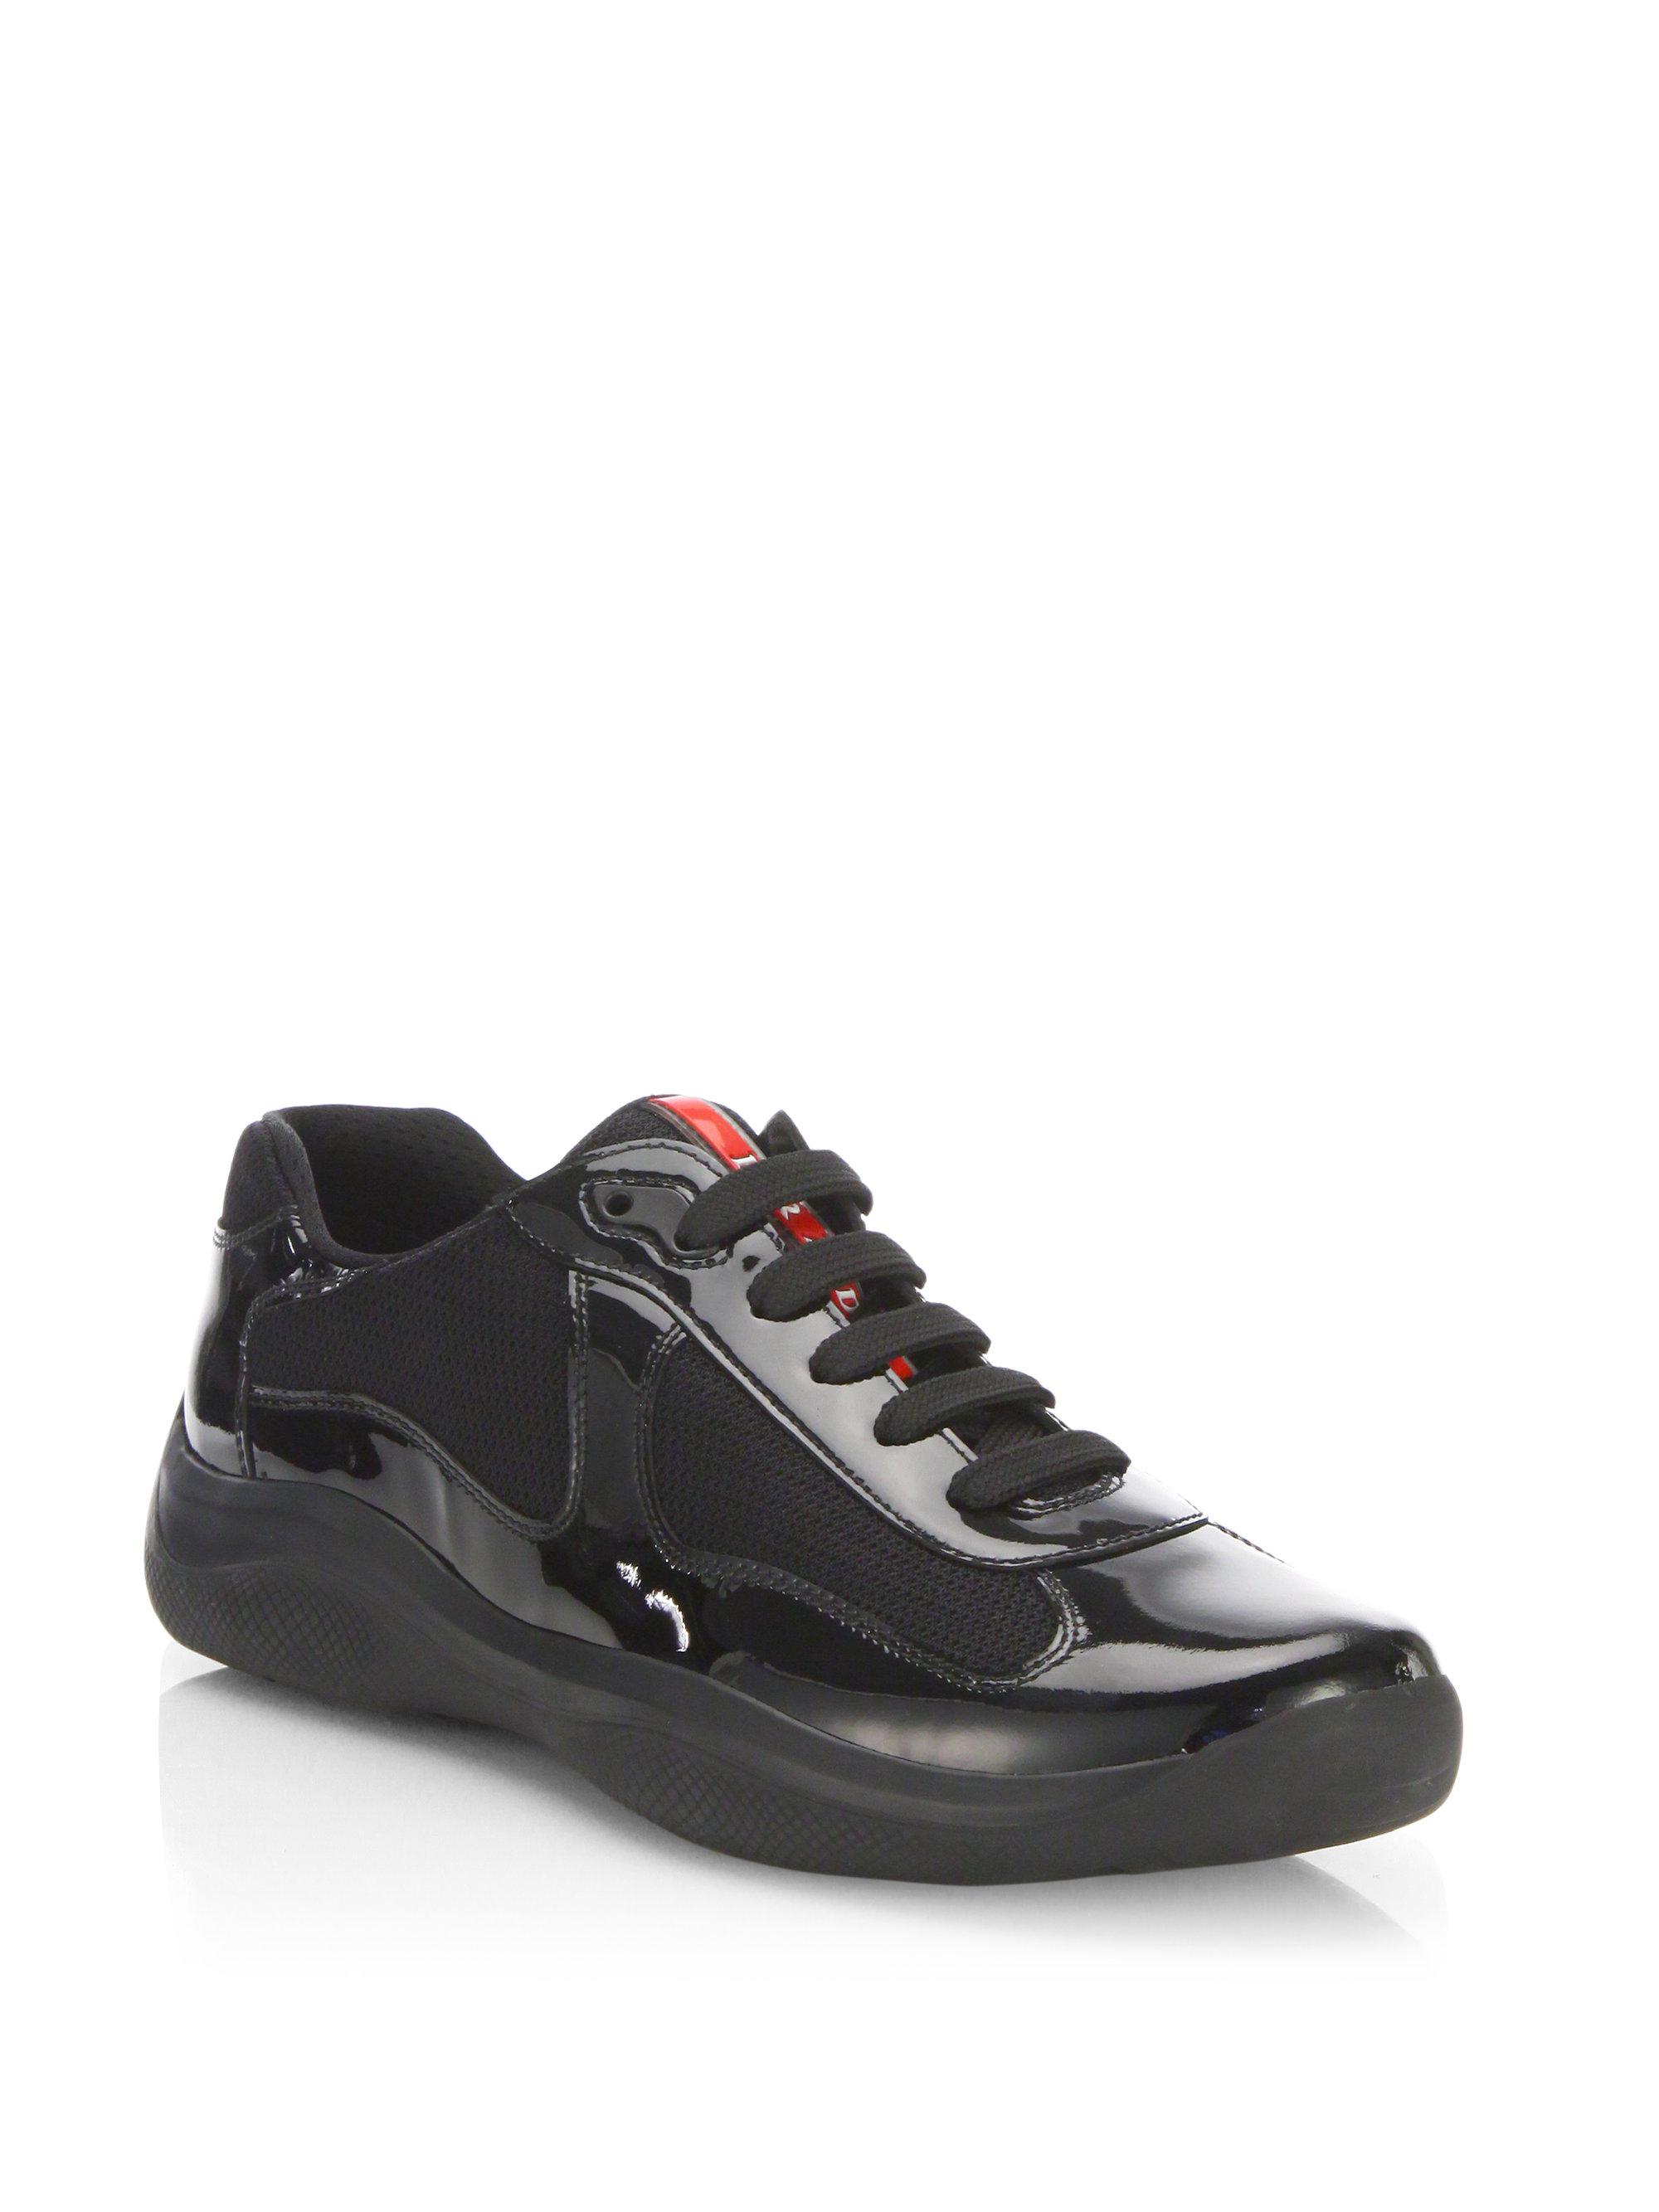 Prada Newac Patent Leather Sneakers in Black for Men | Lyst